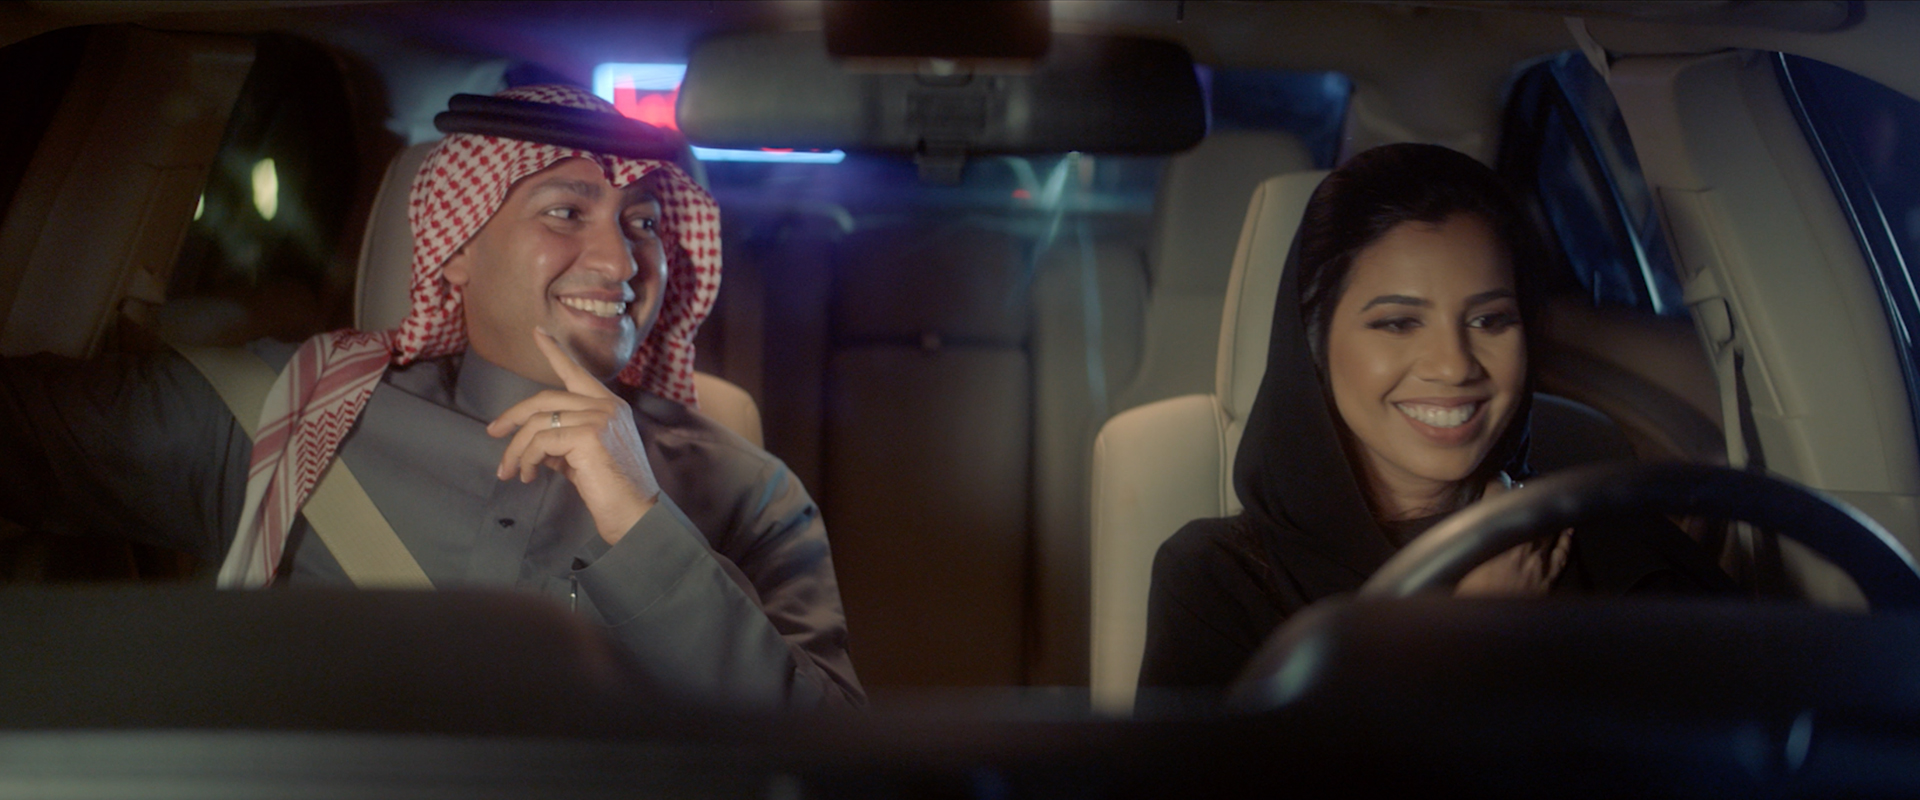 Are men ready for women drivers in Saudi Arabia?, Shell